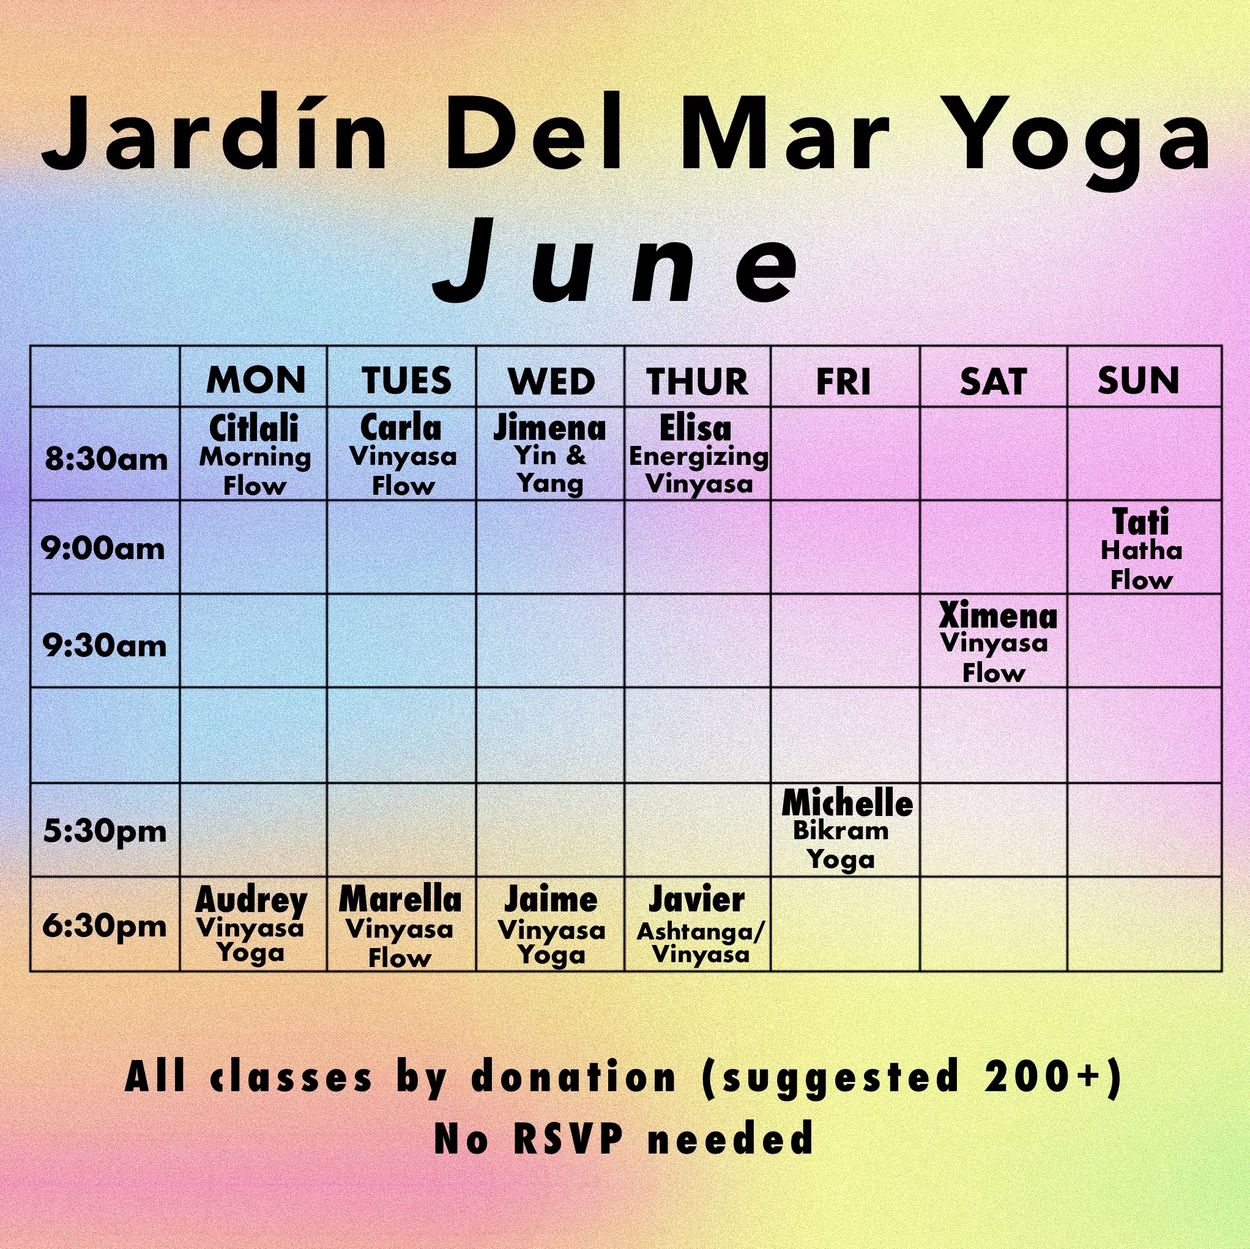 Jardin Del Mar Yoga June Schedule